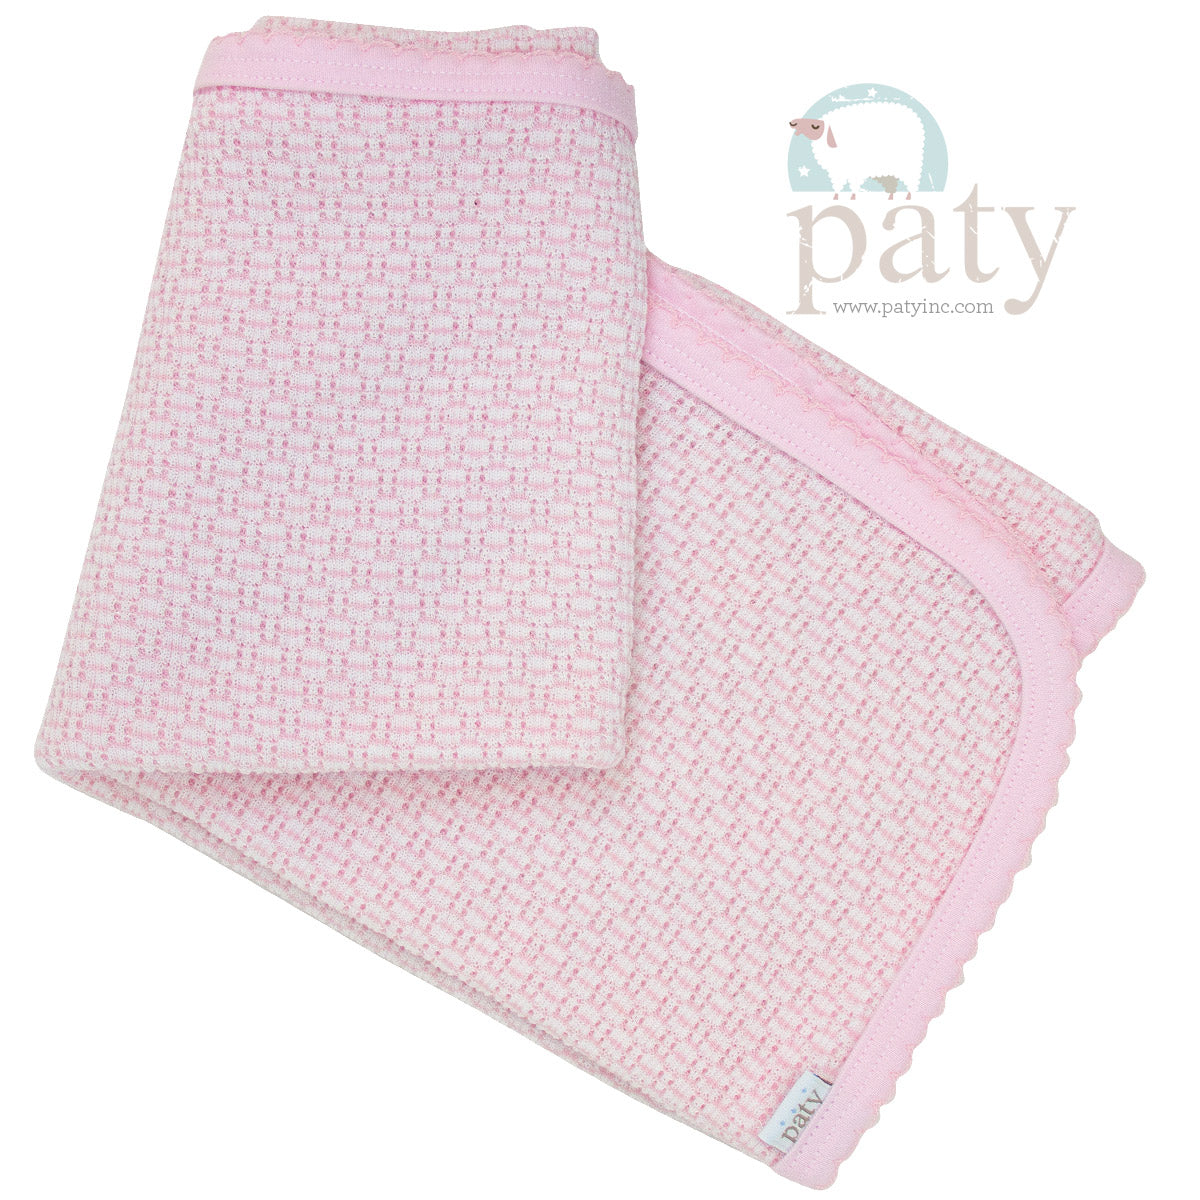 Knit Blanket w/ Cotton Trim Options